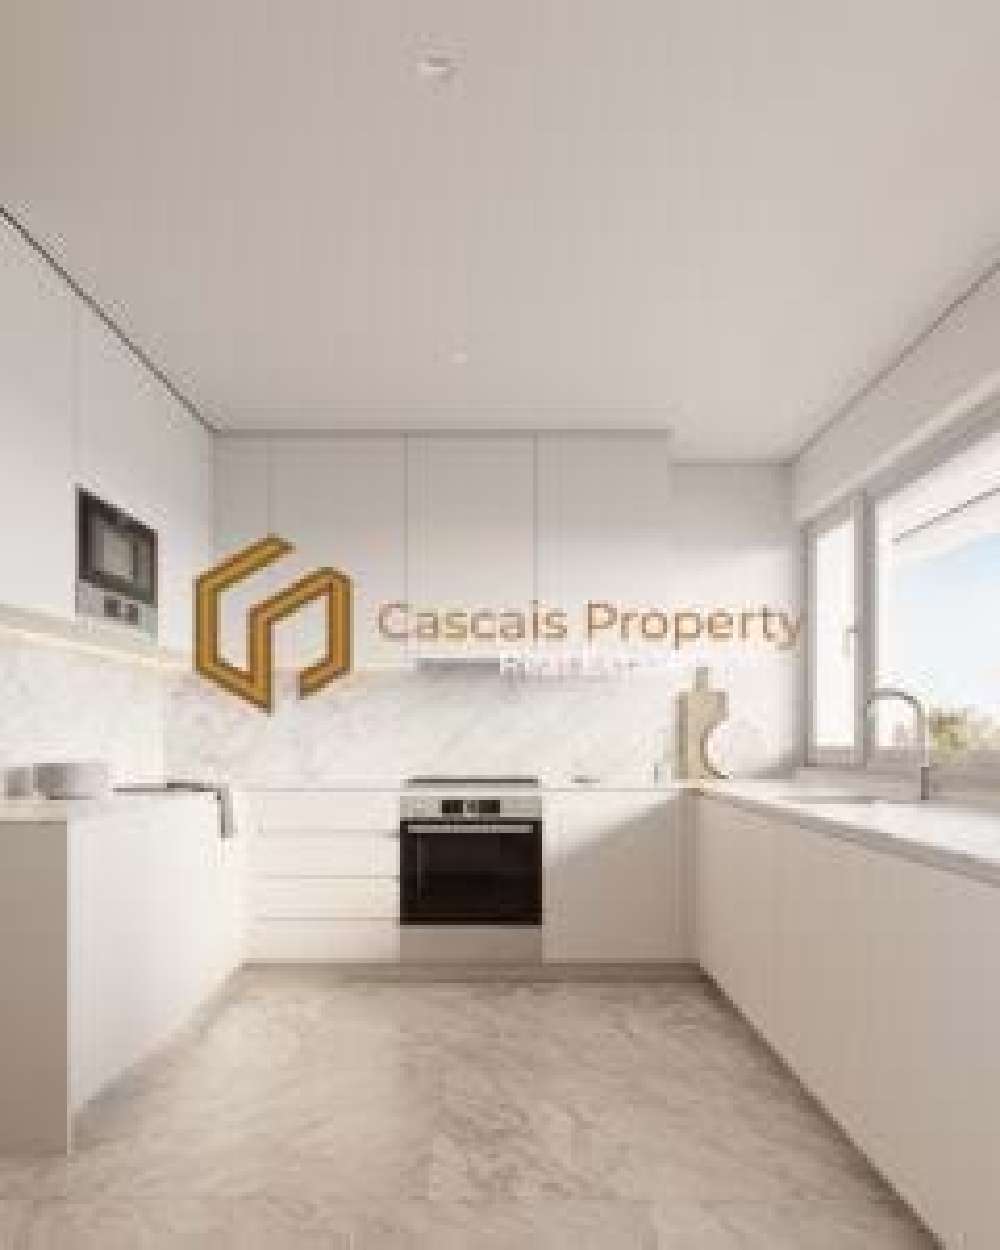  for sale apartment  Cascais  Cascais 8